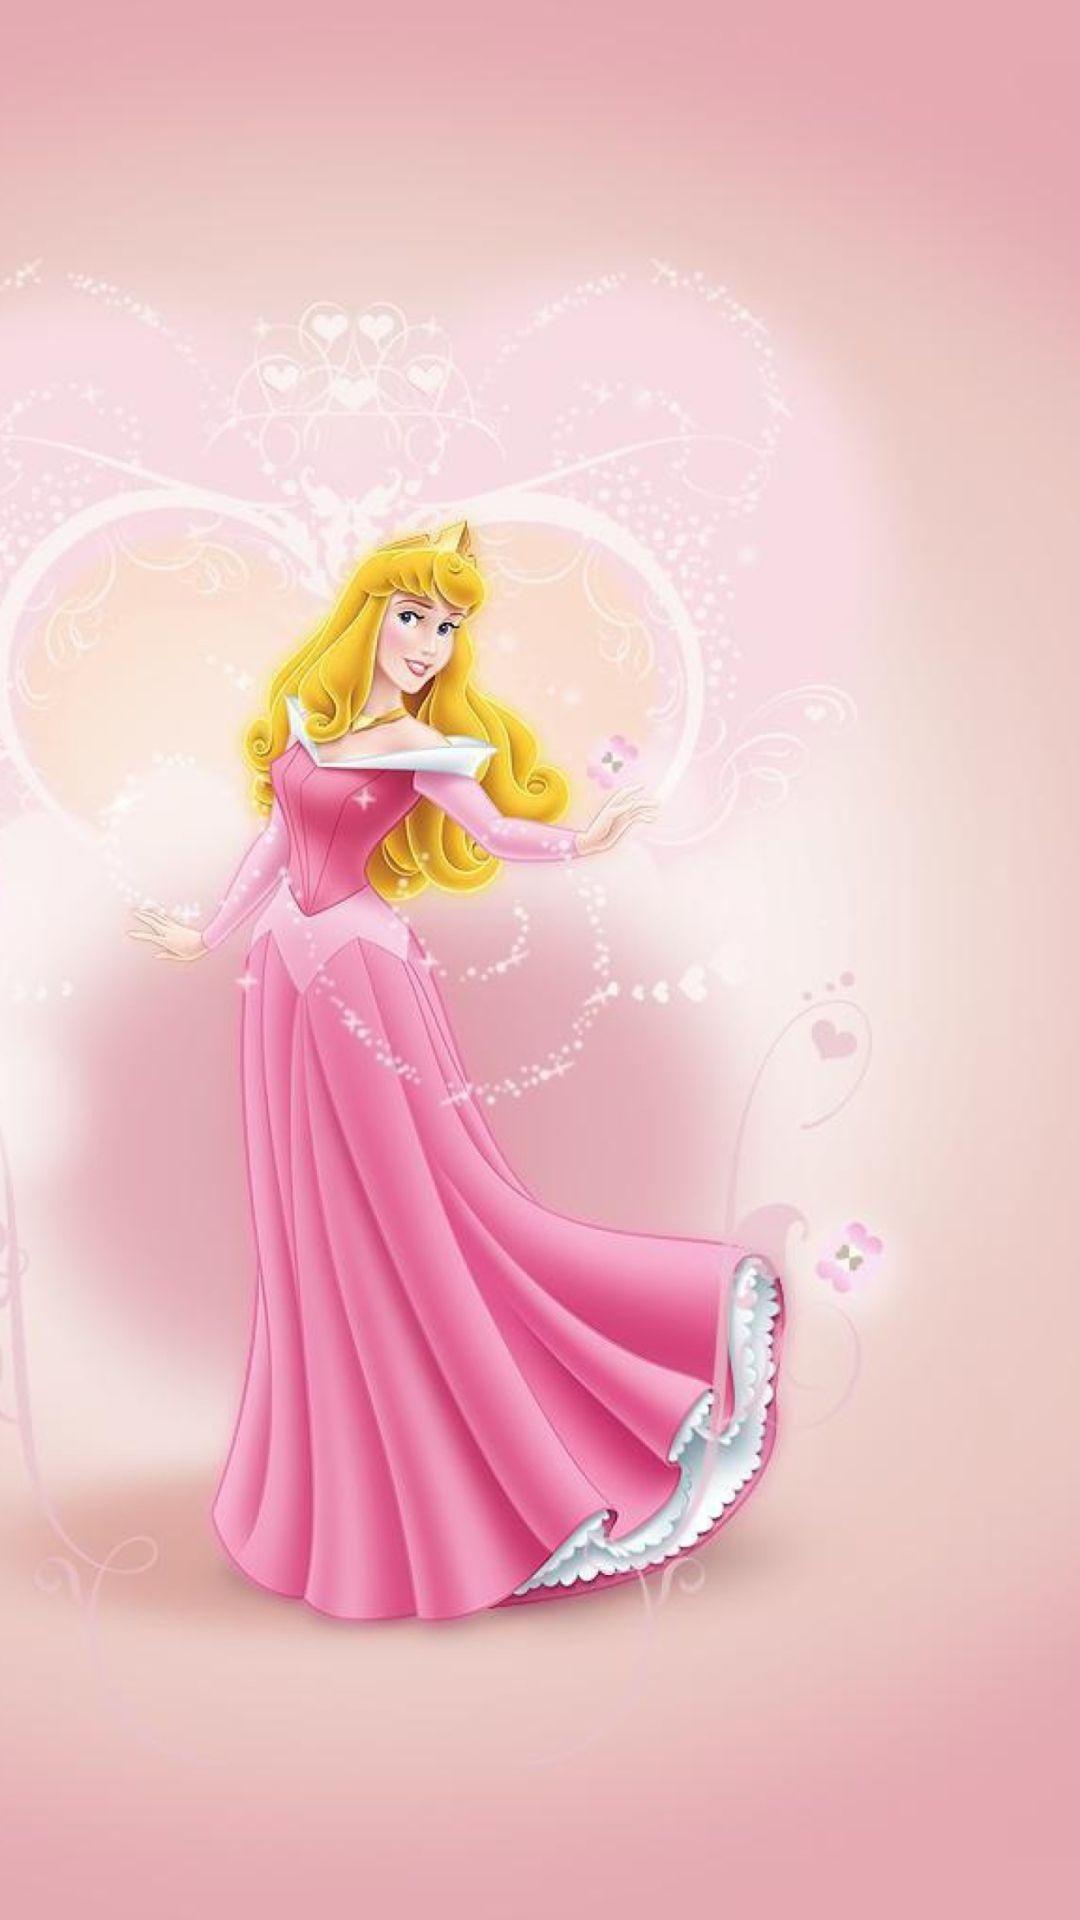 Disney Princess Iphone Wallpapers Top Free Disney Princess Iphone Backgrounds Wallpaperaccess